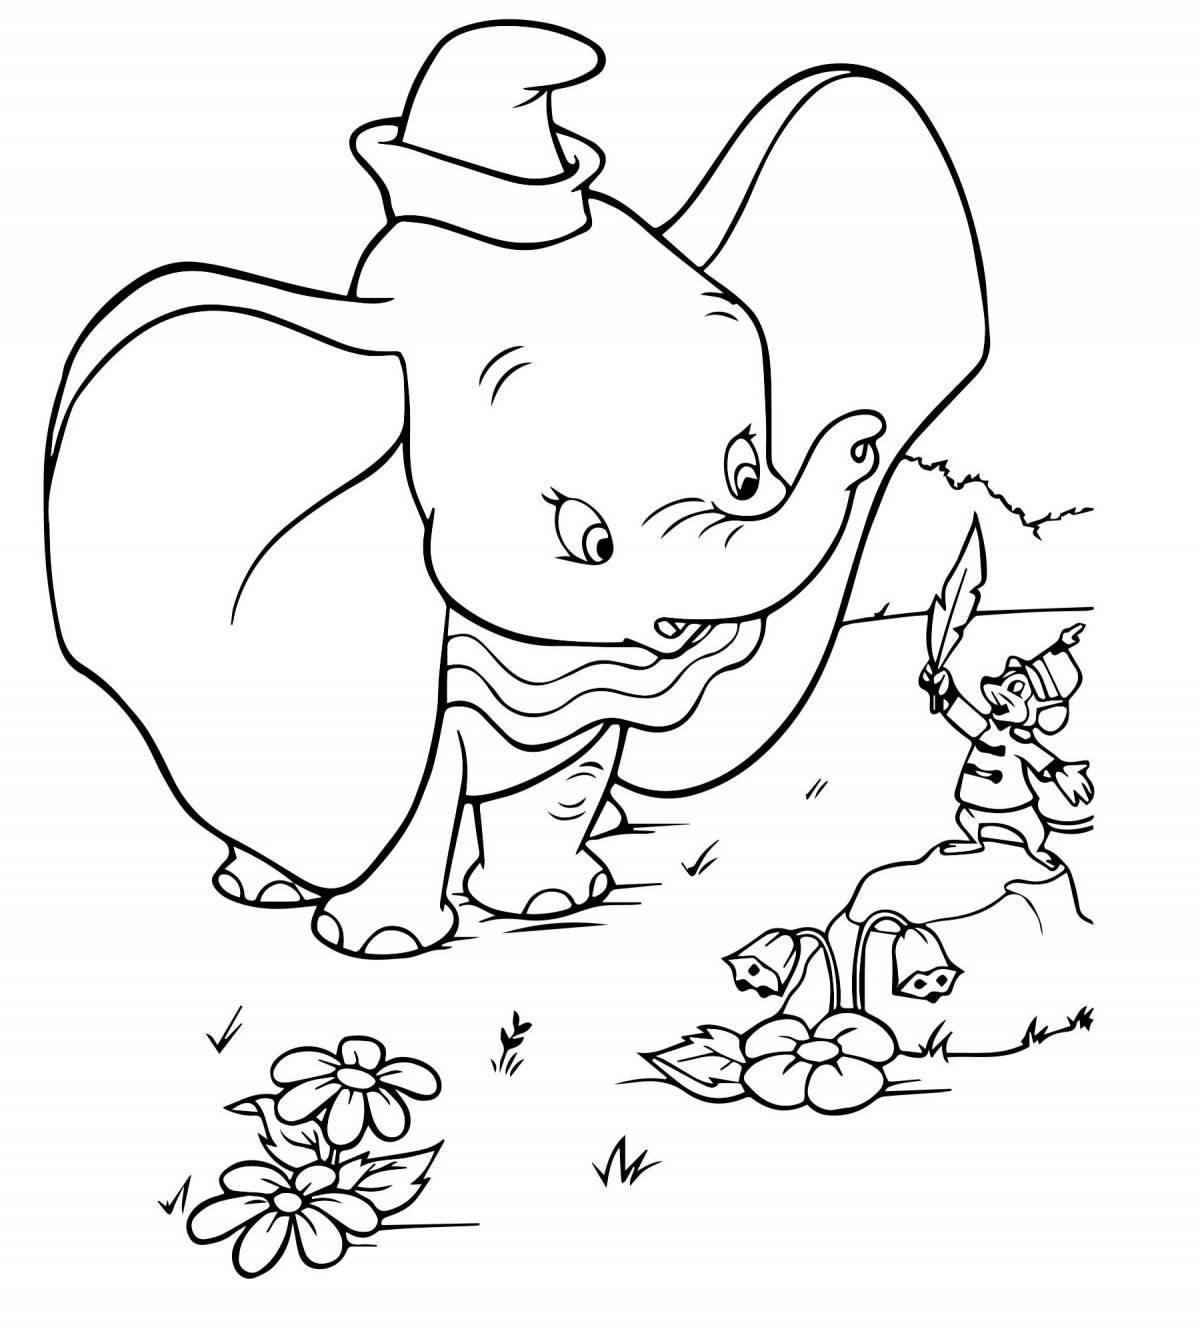 Fancy coloring Dumbo elephant